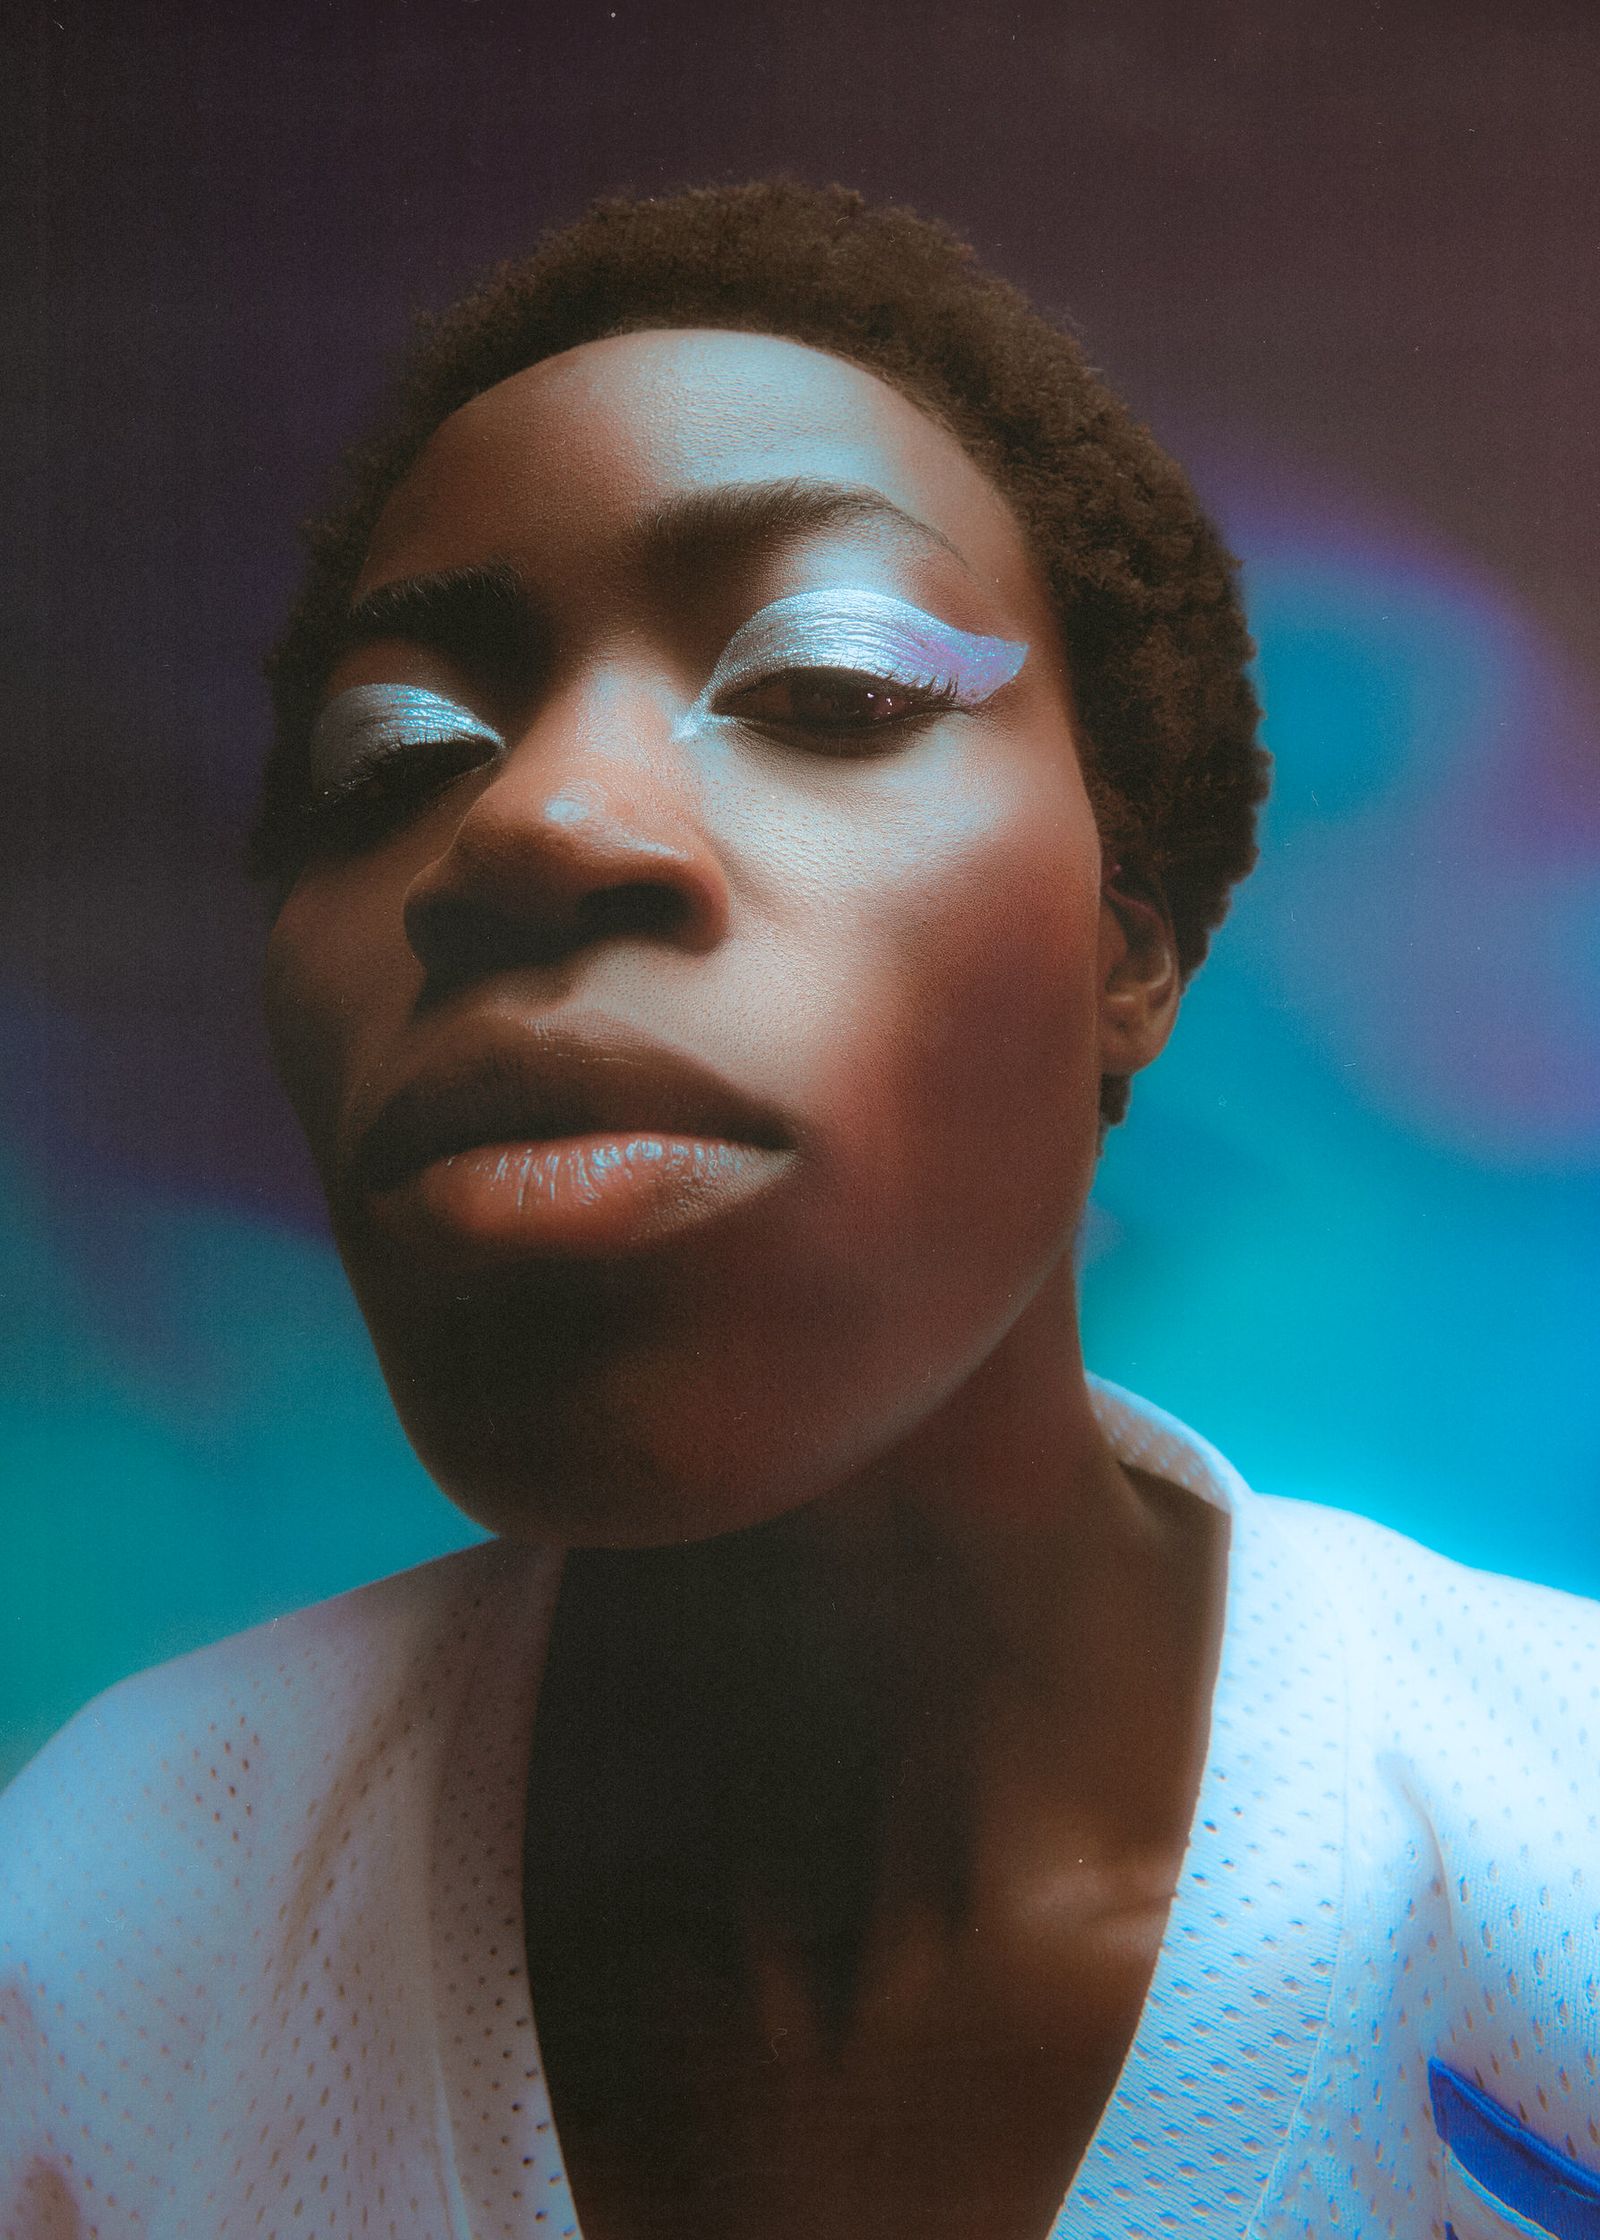 a portrait of a black woman with white eye makeup